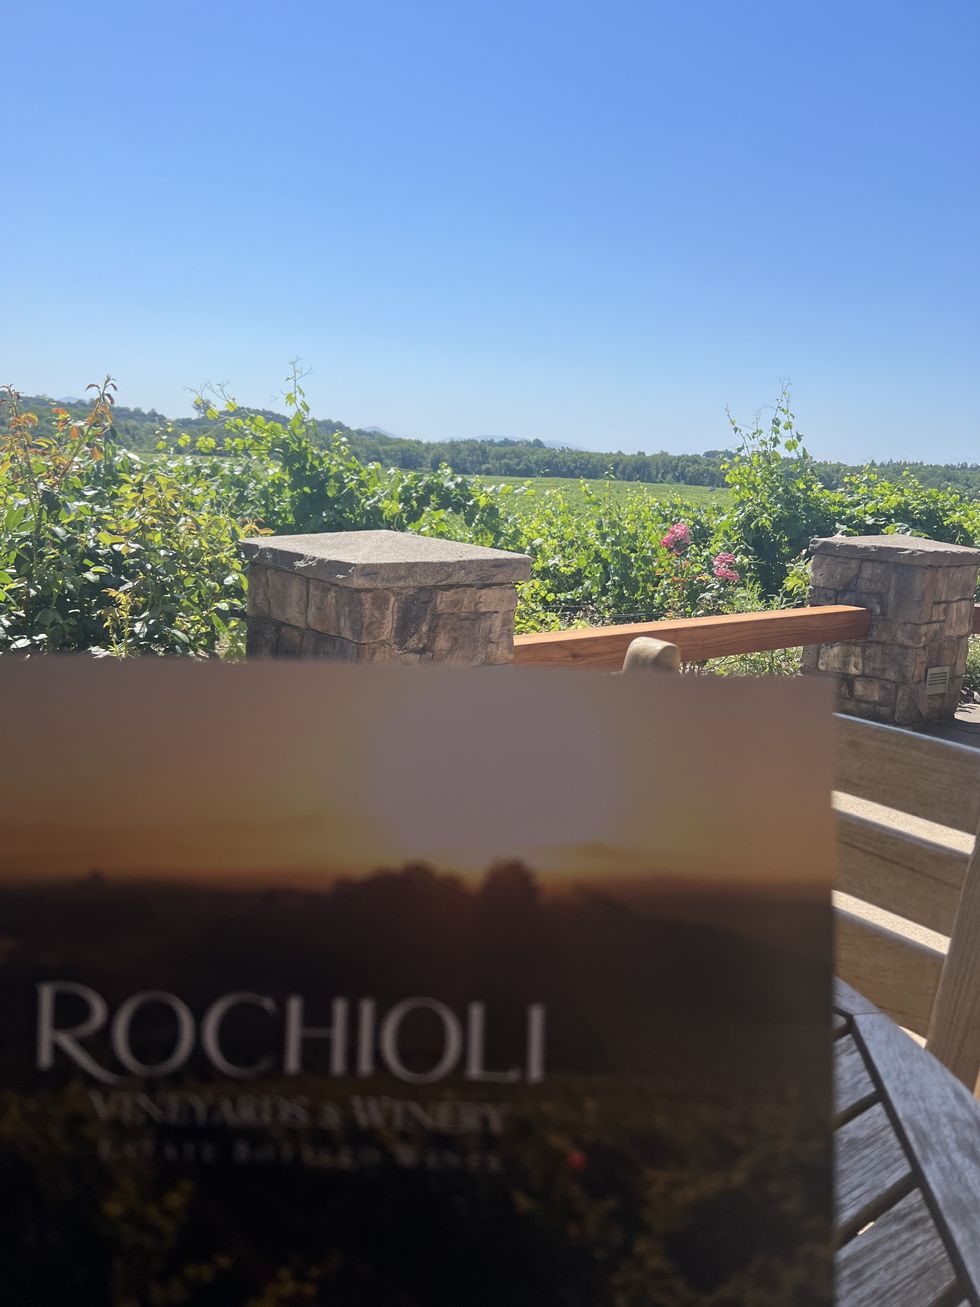 Rochioli winery